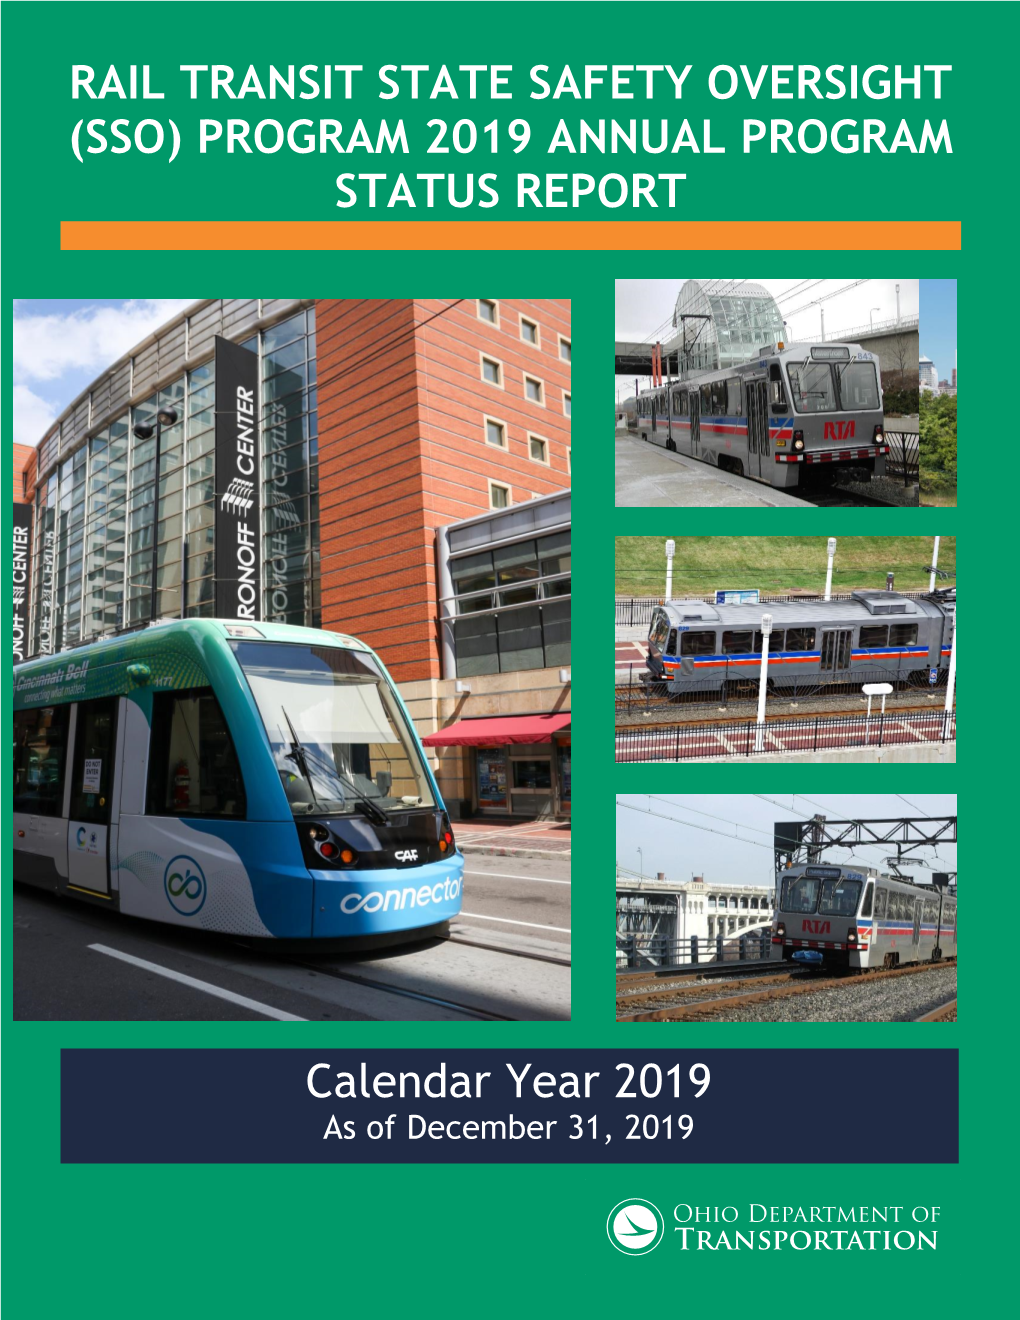 (Sso) Program 2019 Annual Program Status Report